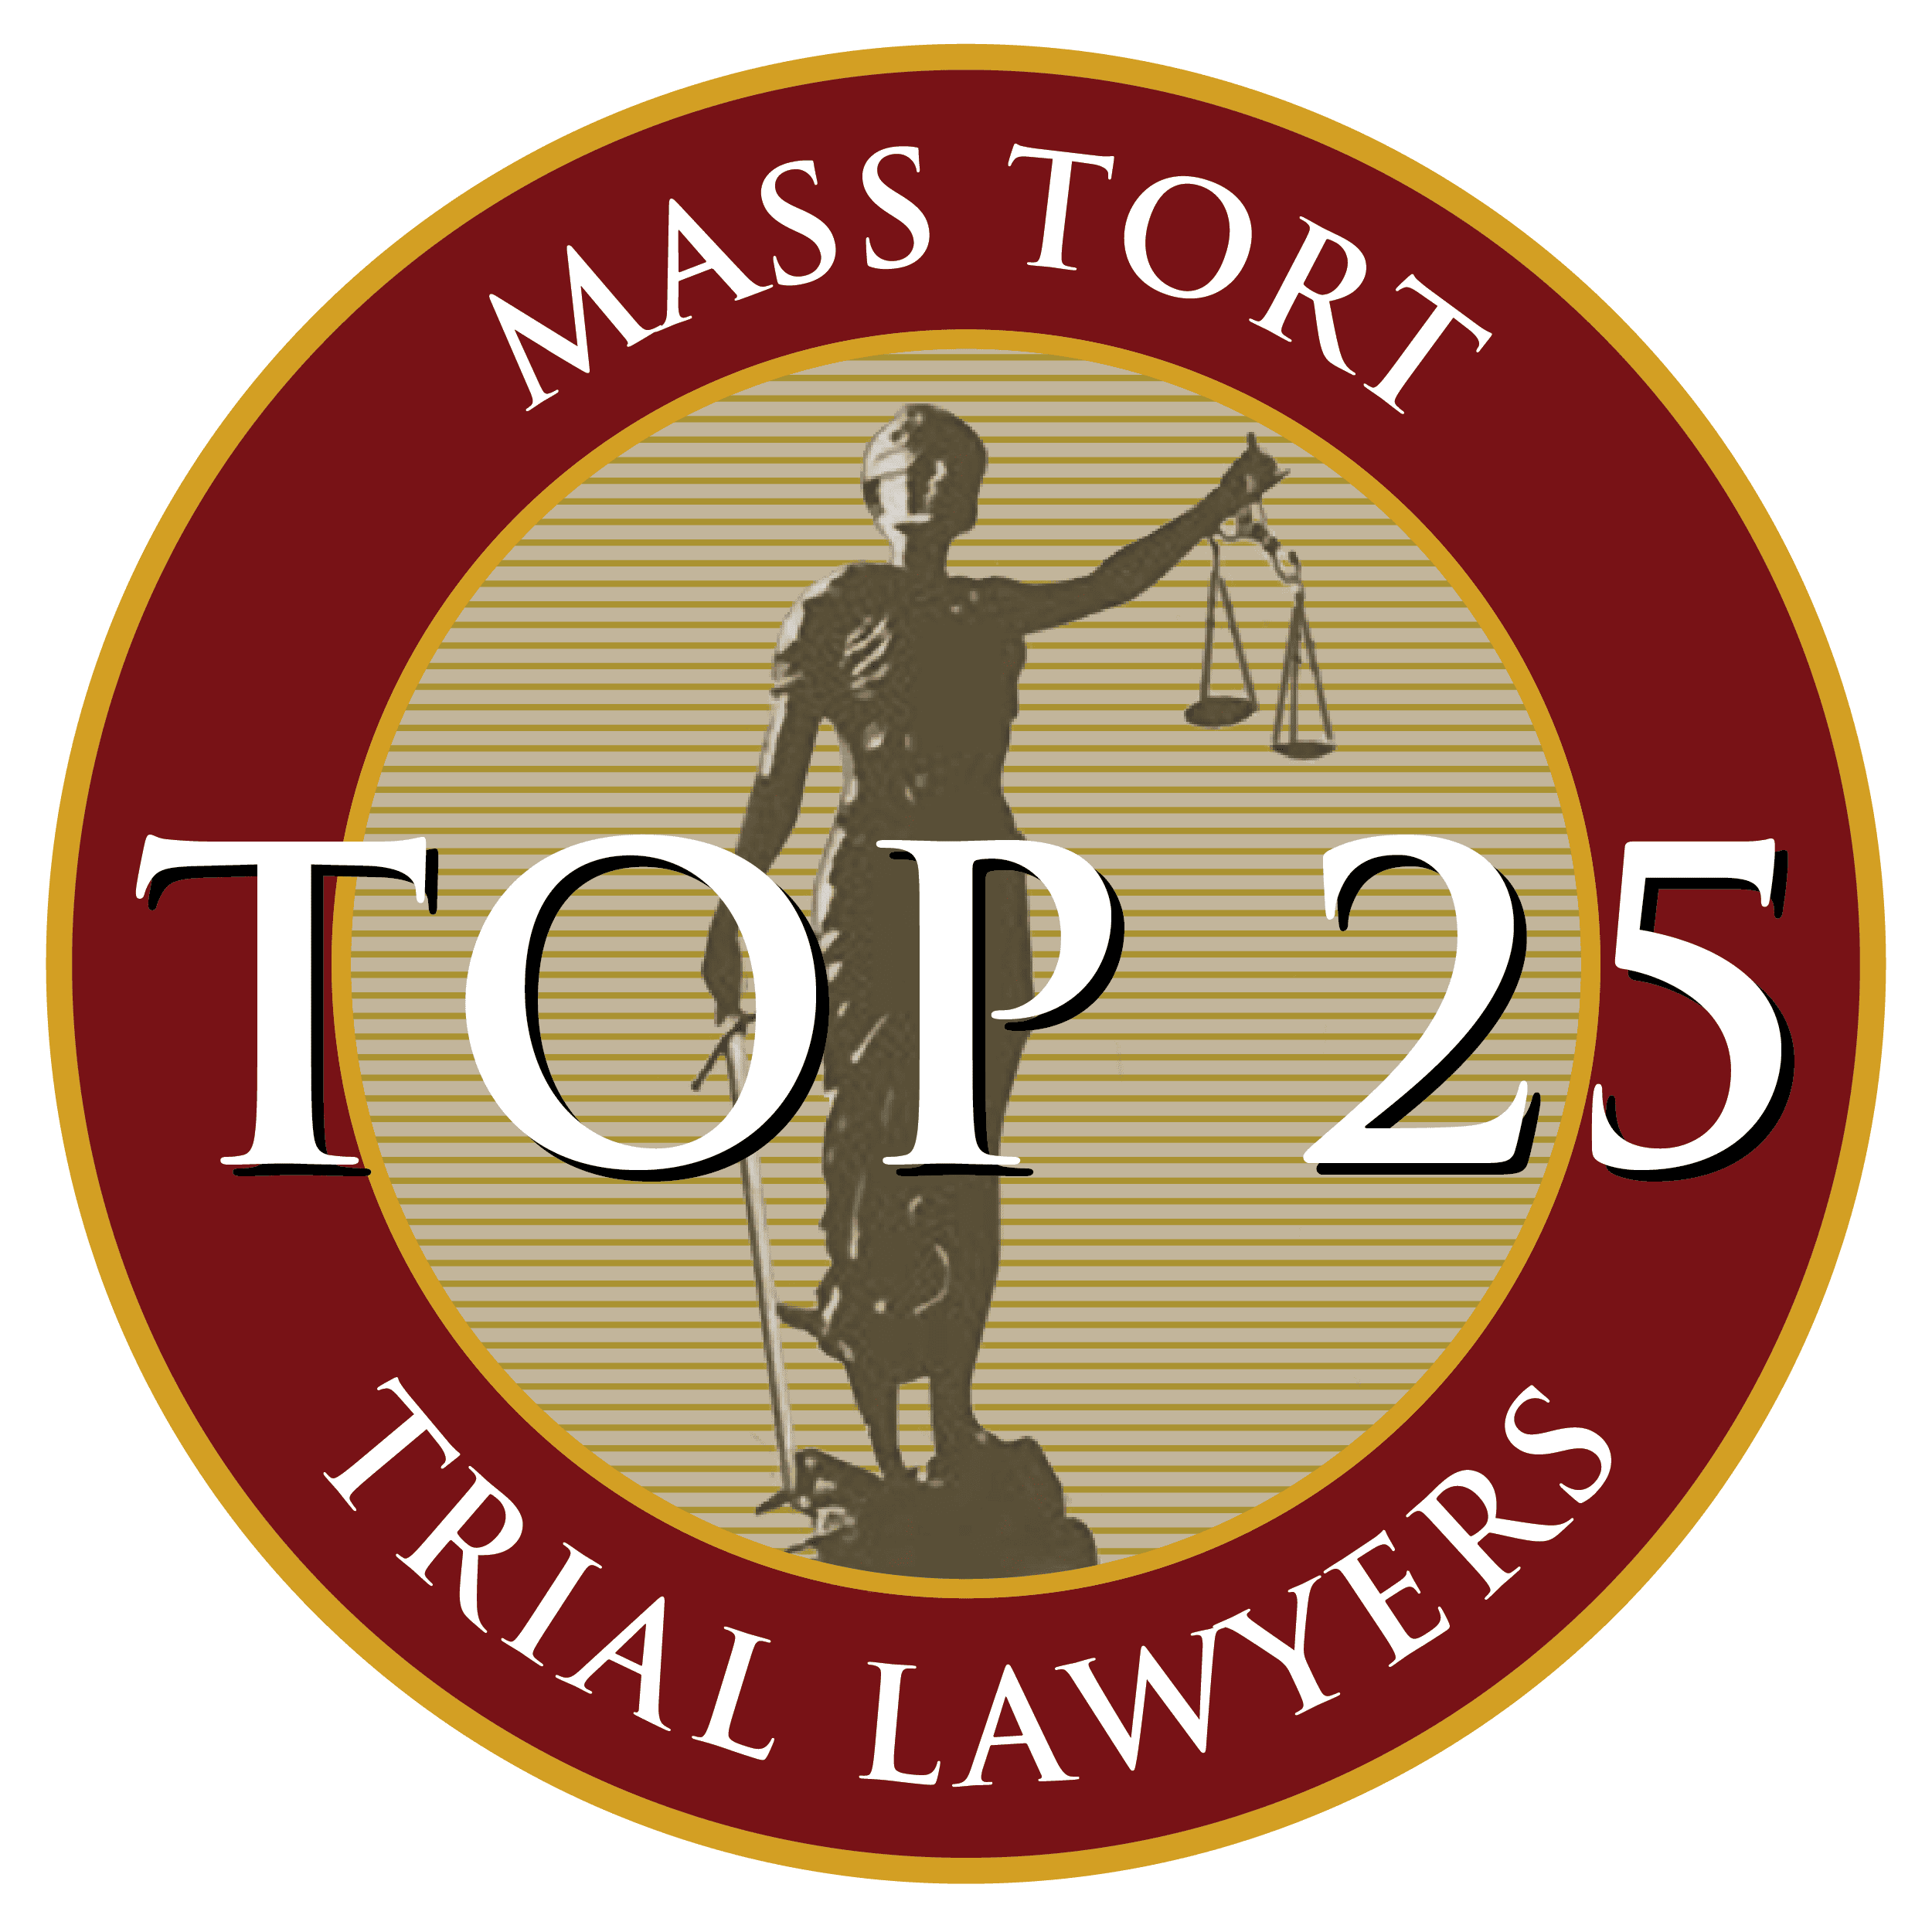 Mass Tort Trial Lawyers Logo - Top 25 Trial Lawyers - Martin, Harding & Mazzotti 1800law1010